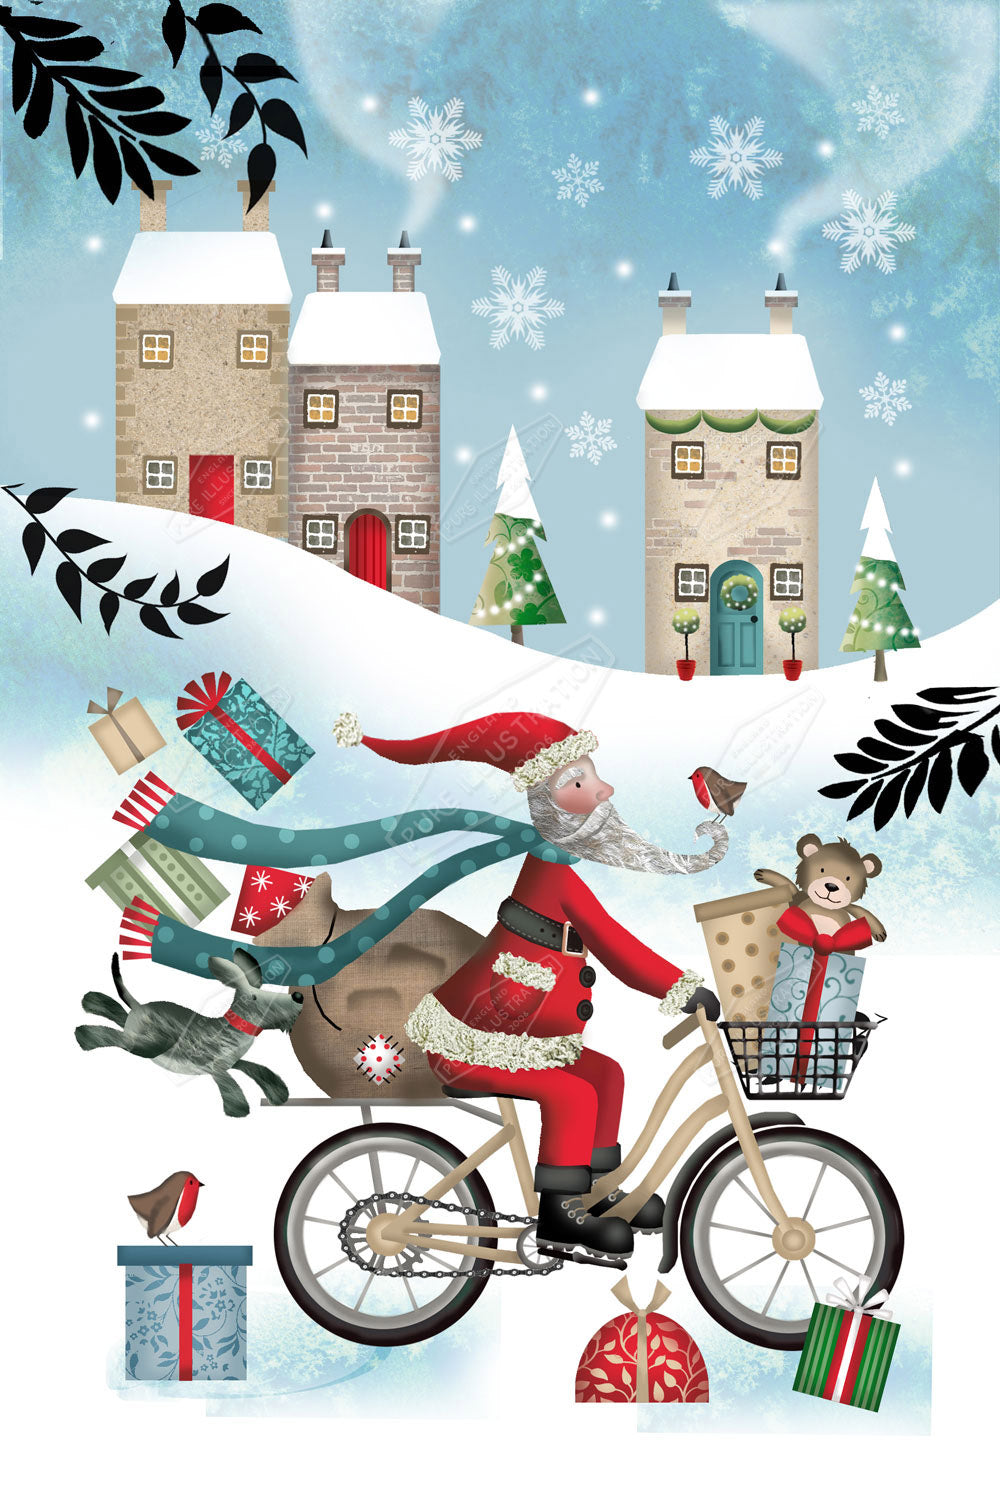 00023293DEV - Deva Evans is represented by Pure Art Licensing Agency - Christmas Greeting Card Design